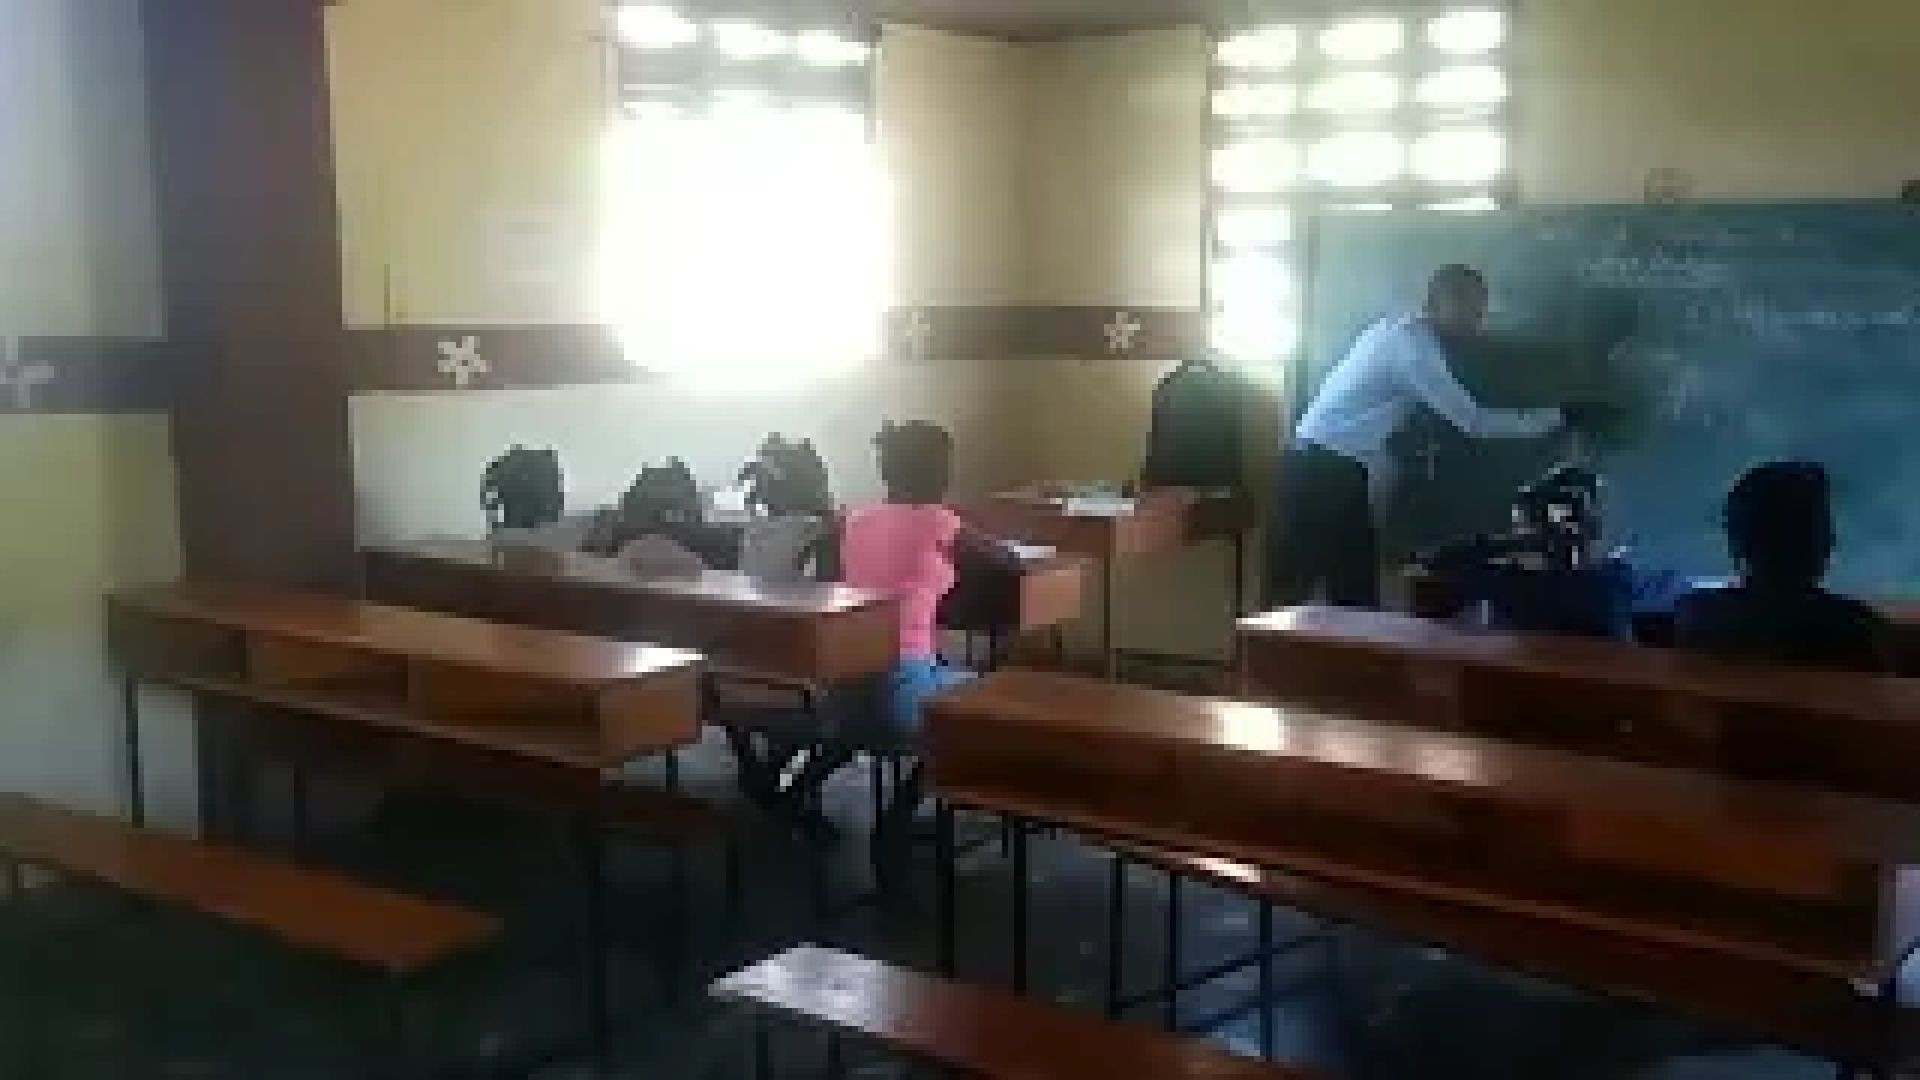 School has Started in Haiti❗️The Children Begin Returning to Classes